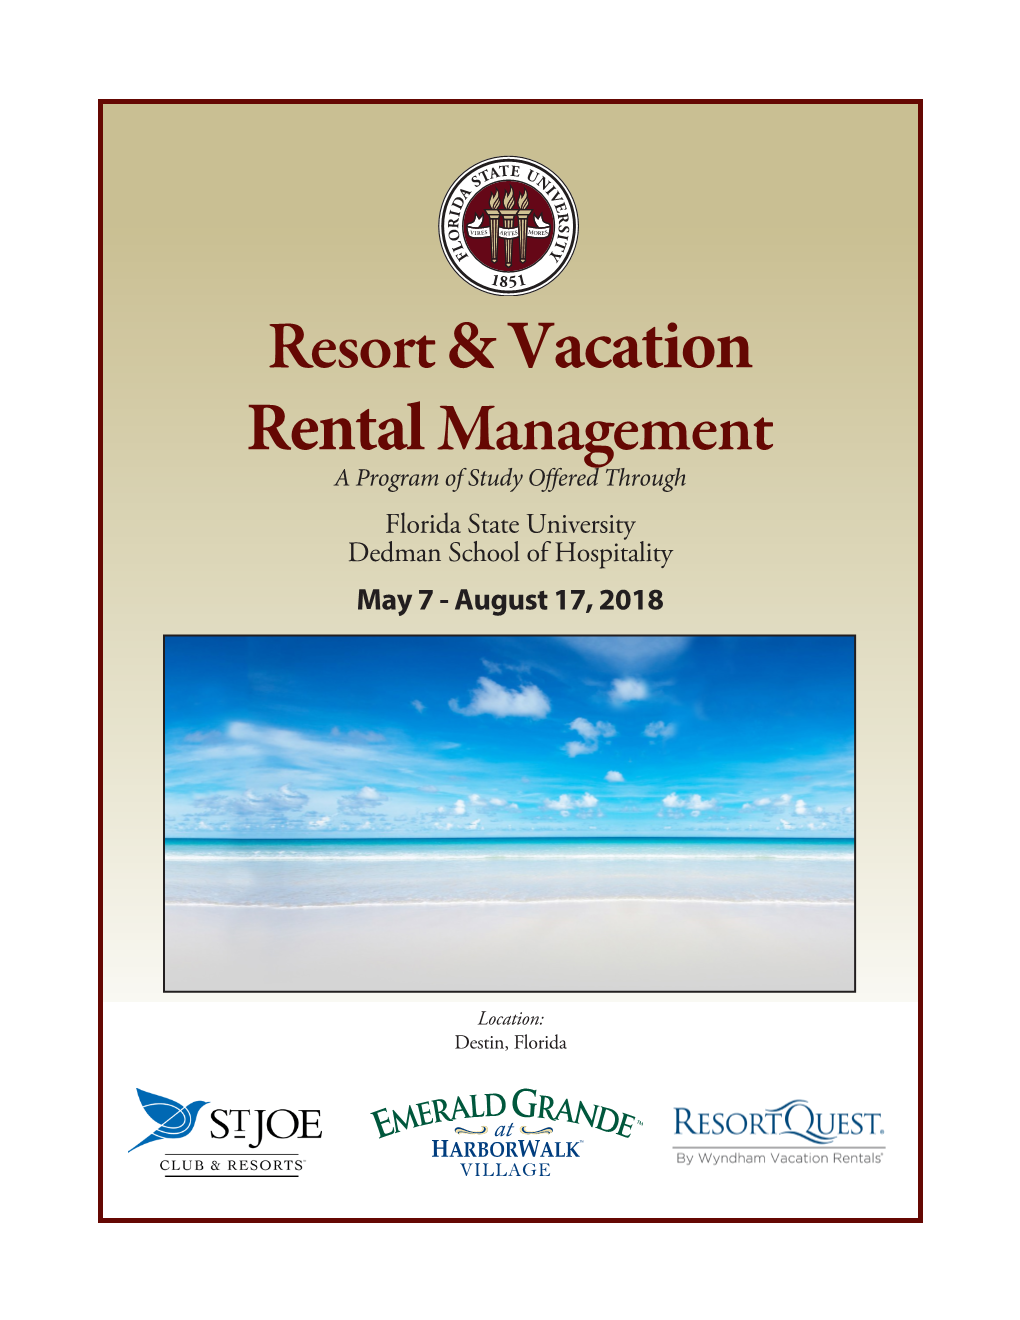 Resort & Vacation Rental Management